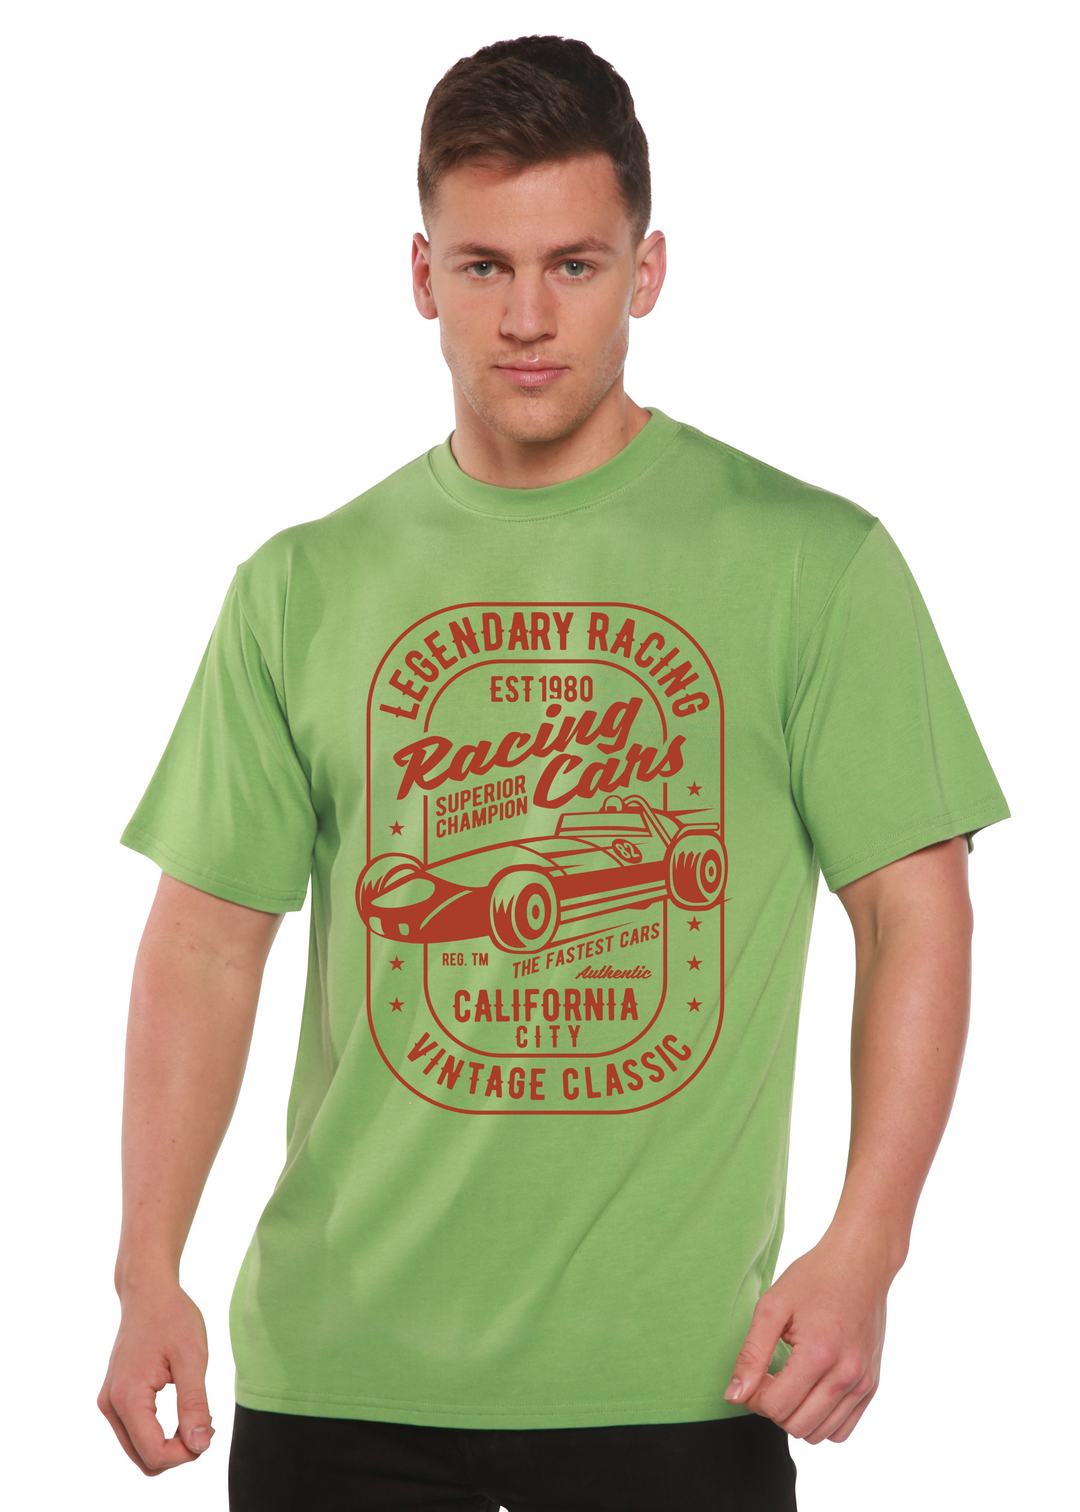 Legendary Racing Cars men's bamboo tshirt green tea